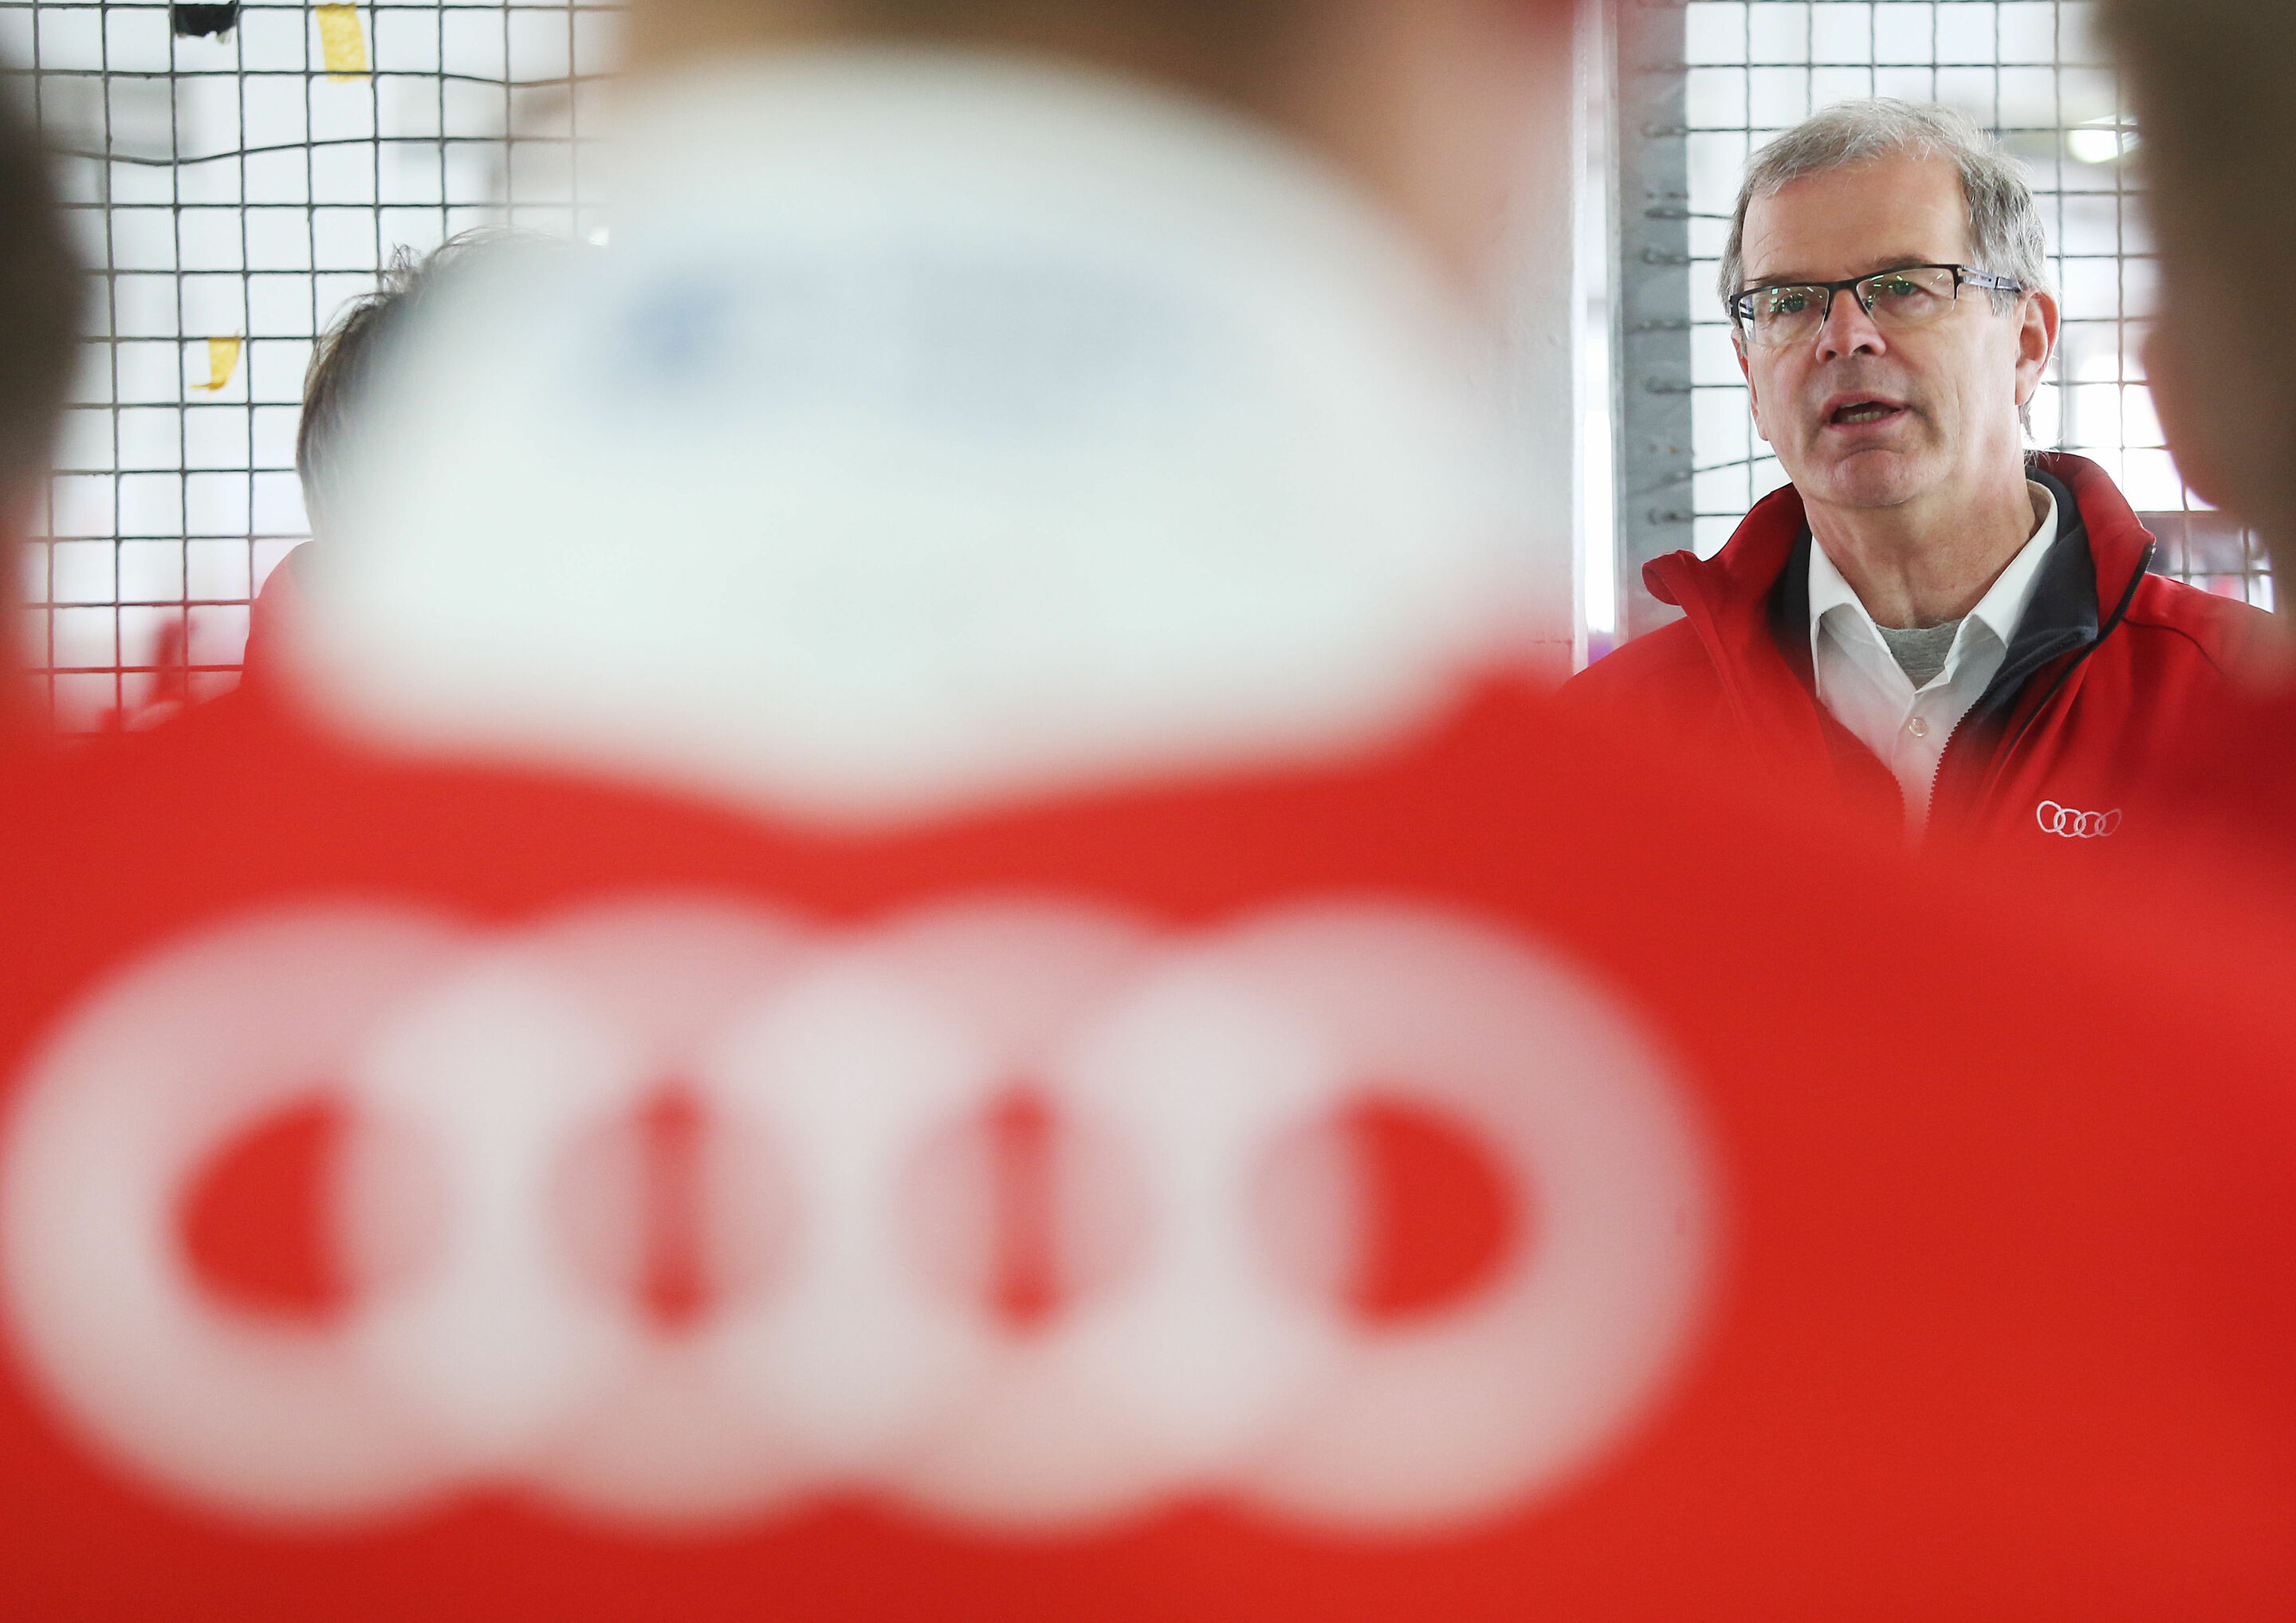 Audi Sport TT Cup 2016, Test Hockenheim